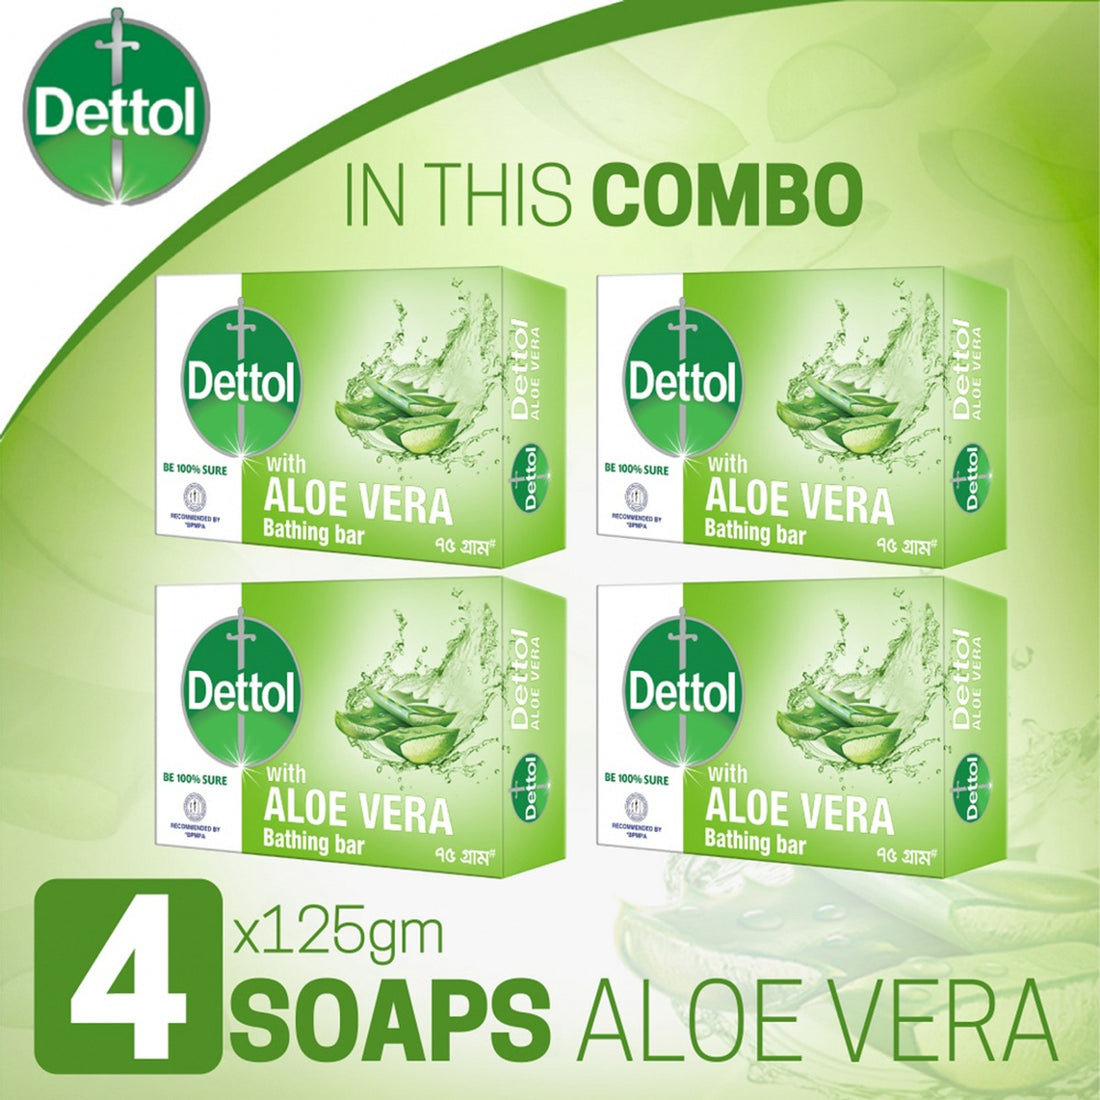 Dettol Soap Aloe Vera Quad Pack (125gm X 4), Soap with Aloe Vera Extract Bathing Bar